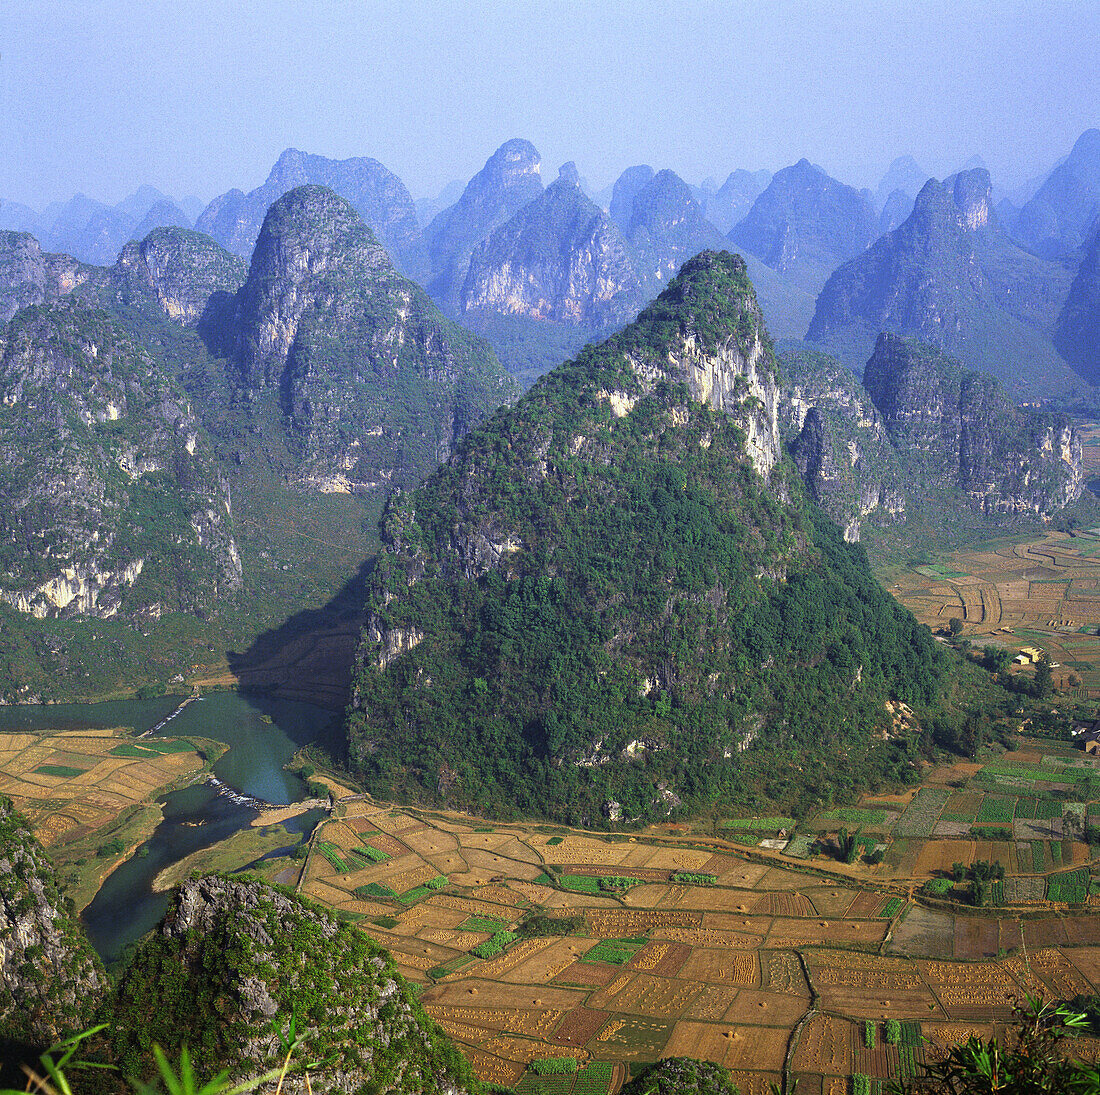 China, Guanxi province, Guilin mountains at Yangshuo